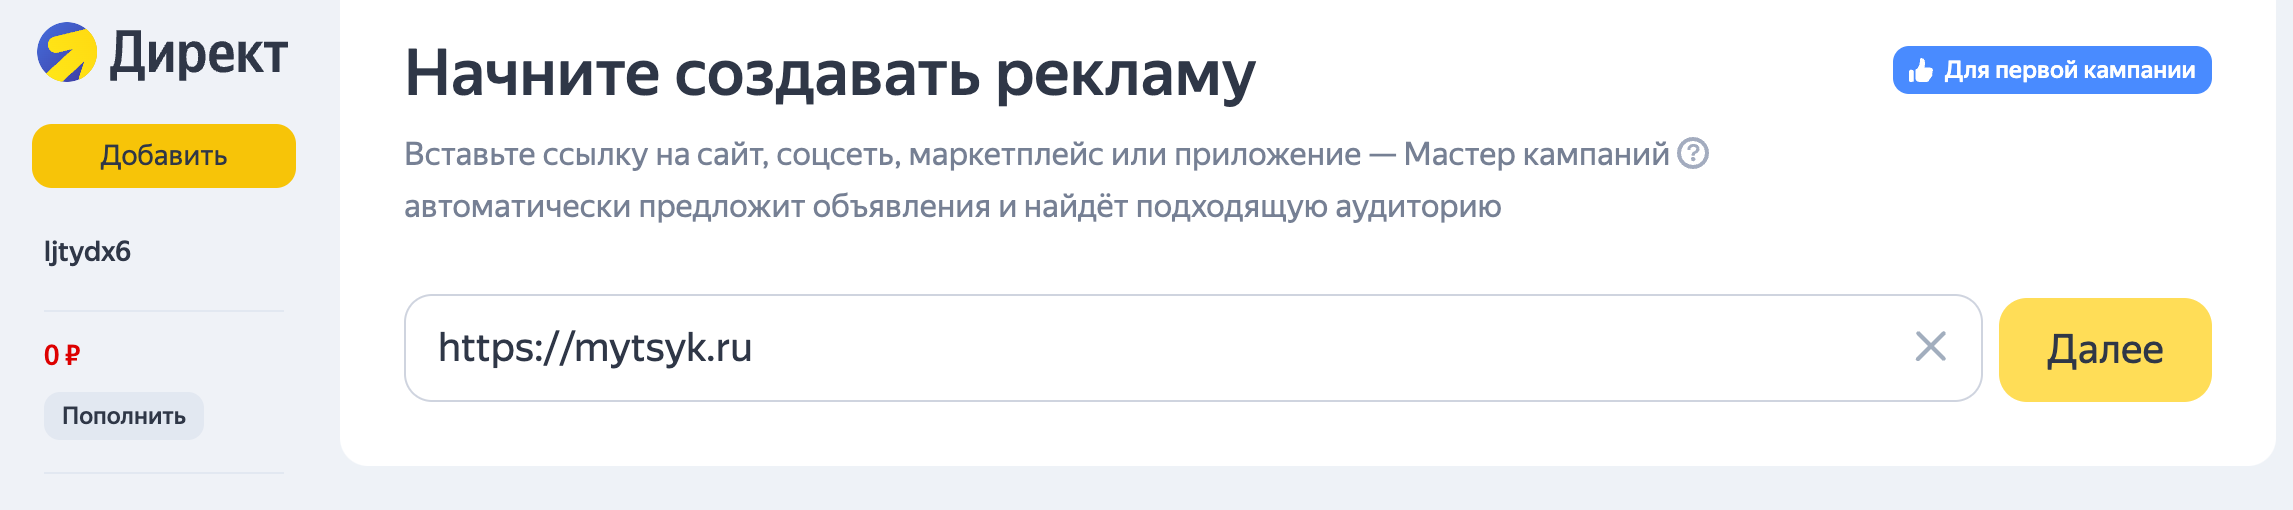 Создание рекламной кампании МК в Яндексе